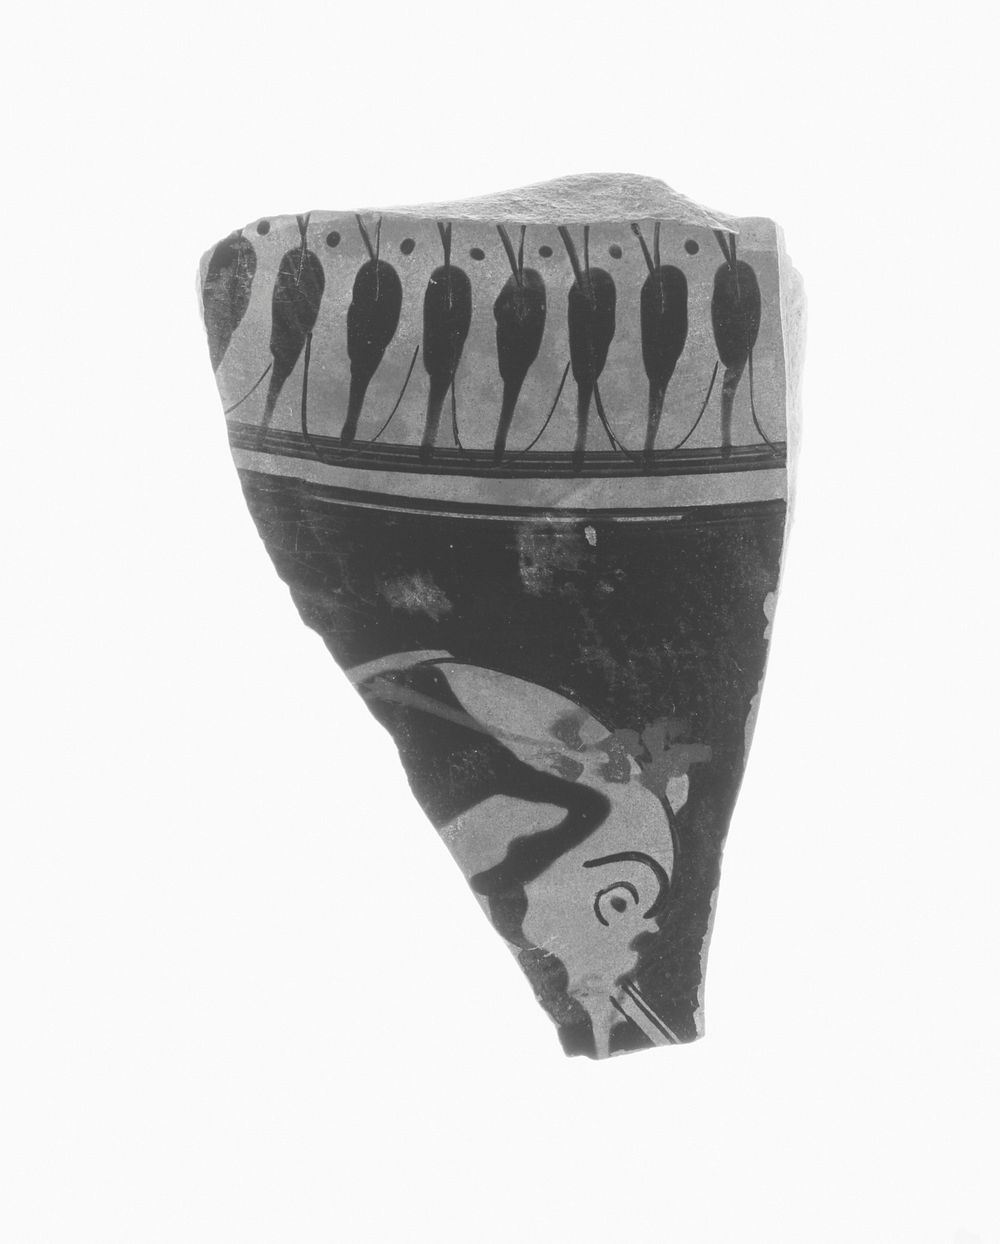 Attic Red-Figure Amphora or Pelike Fragment